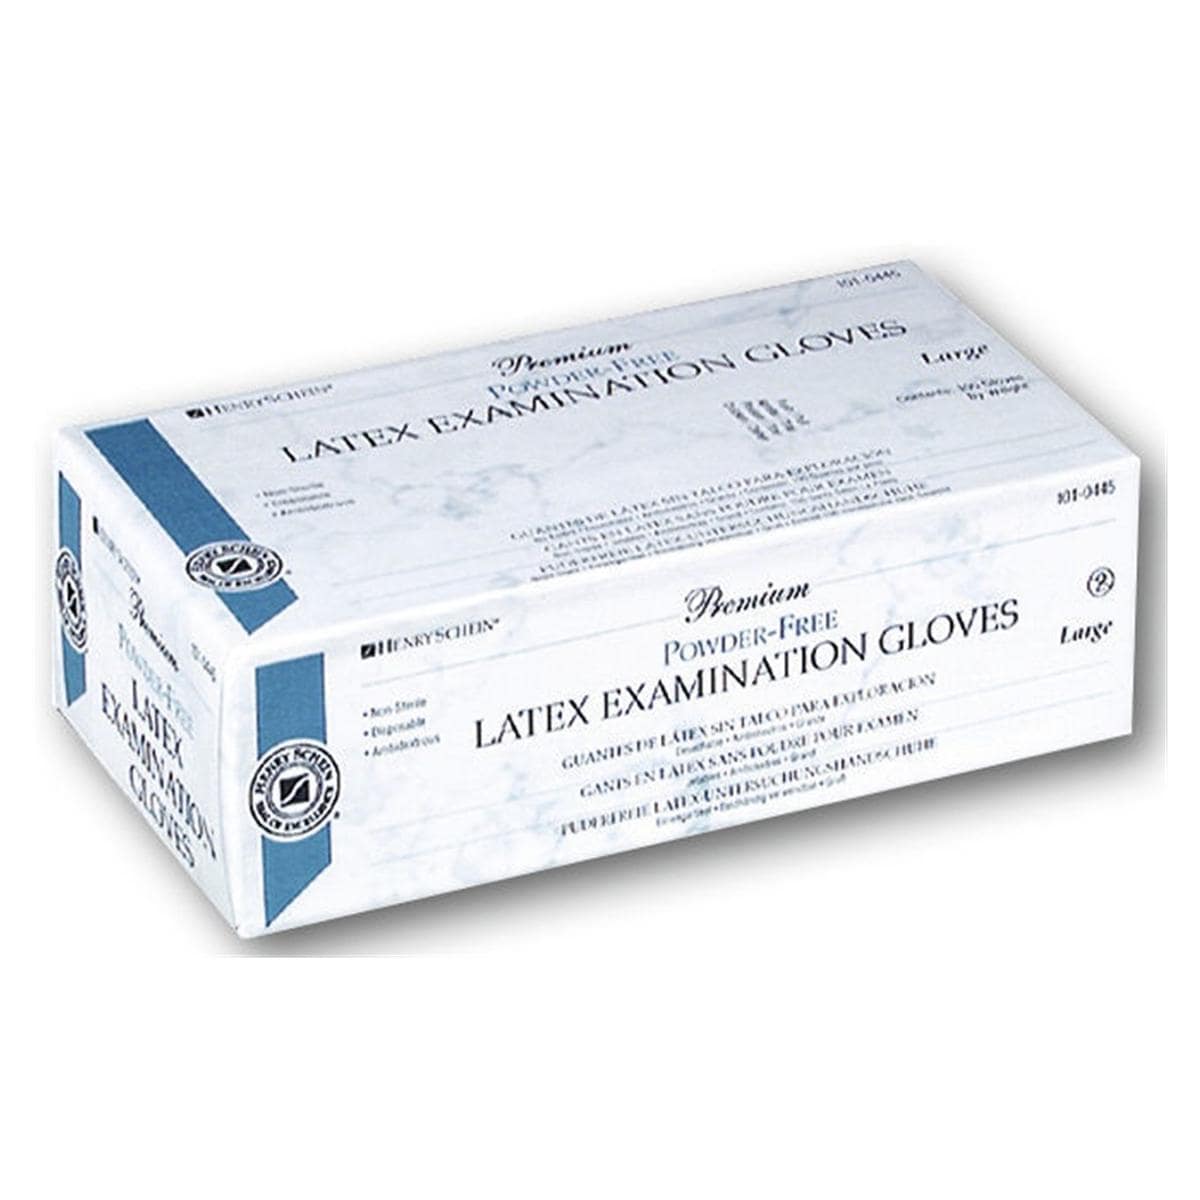 Premium Latex Powder Free Gloves - XS - 100 stuks